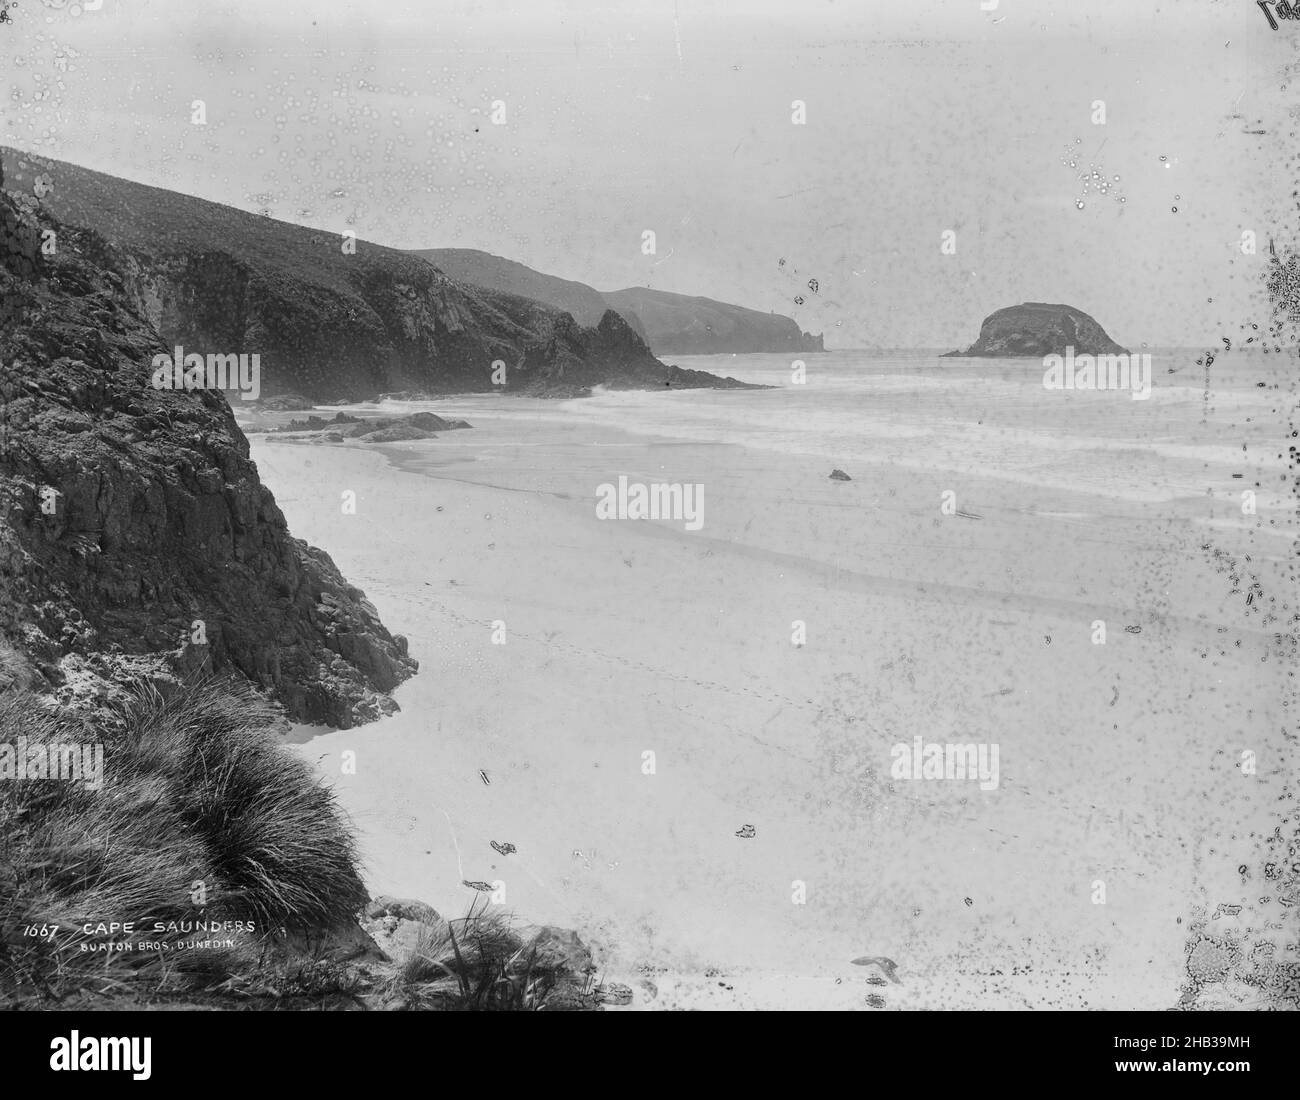 Capo Saunders, studio Burton Brothers, studio fotografico, Nuova Zelanda, fotografia in bianco e nero Foto Stock